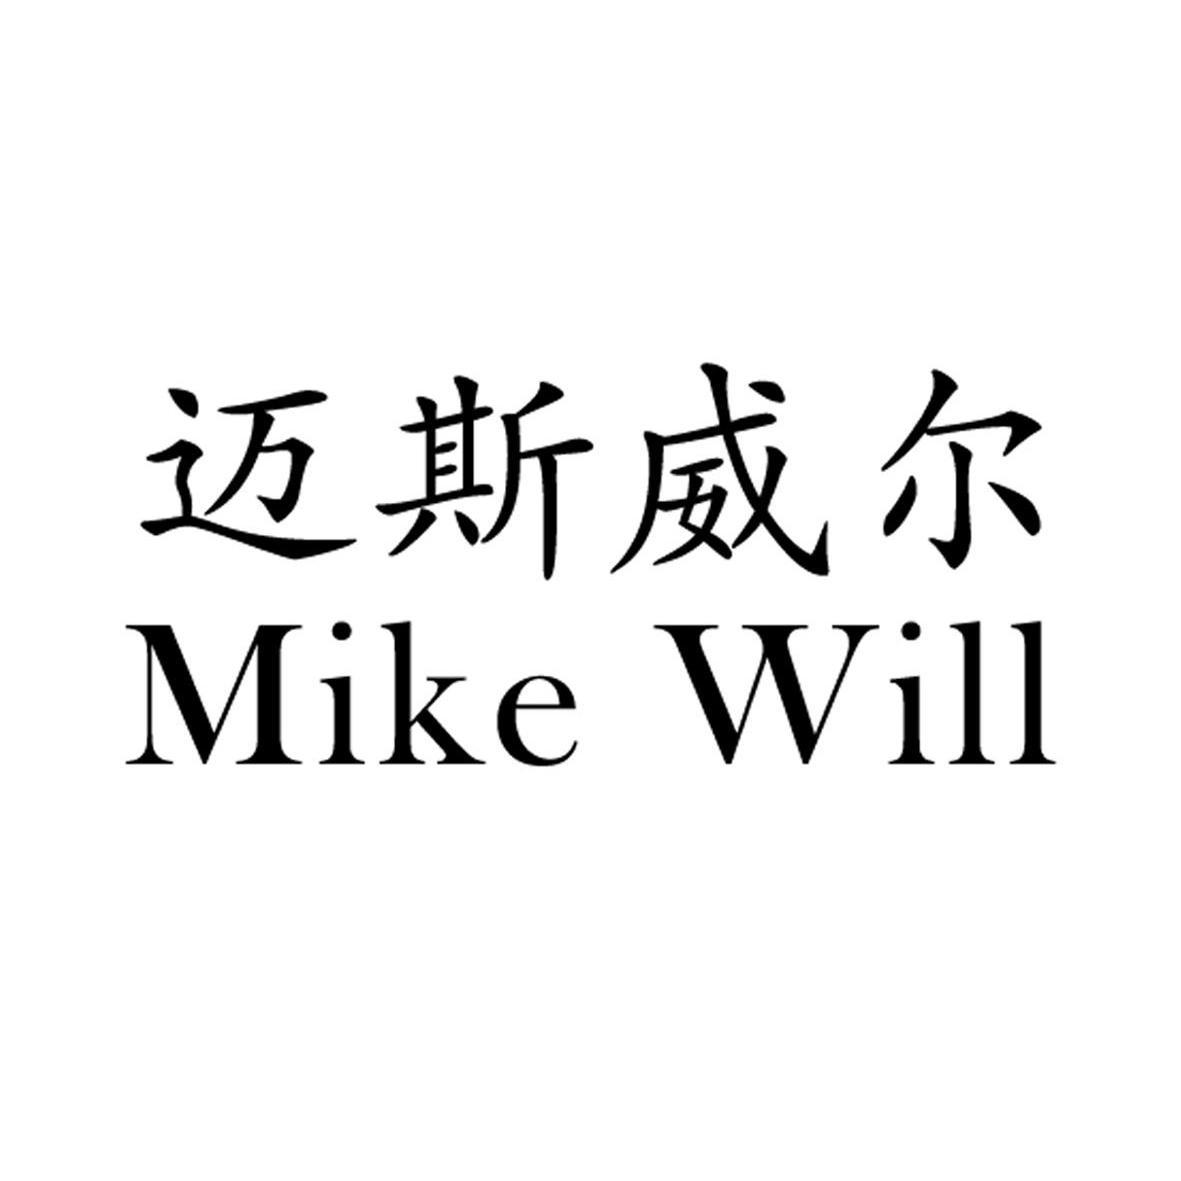 迈斯威尔 MIKE WILL